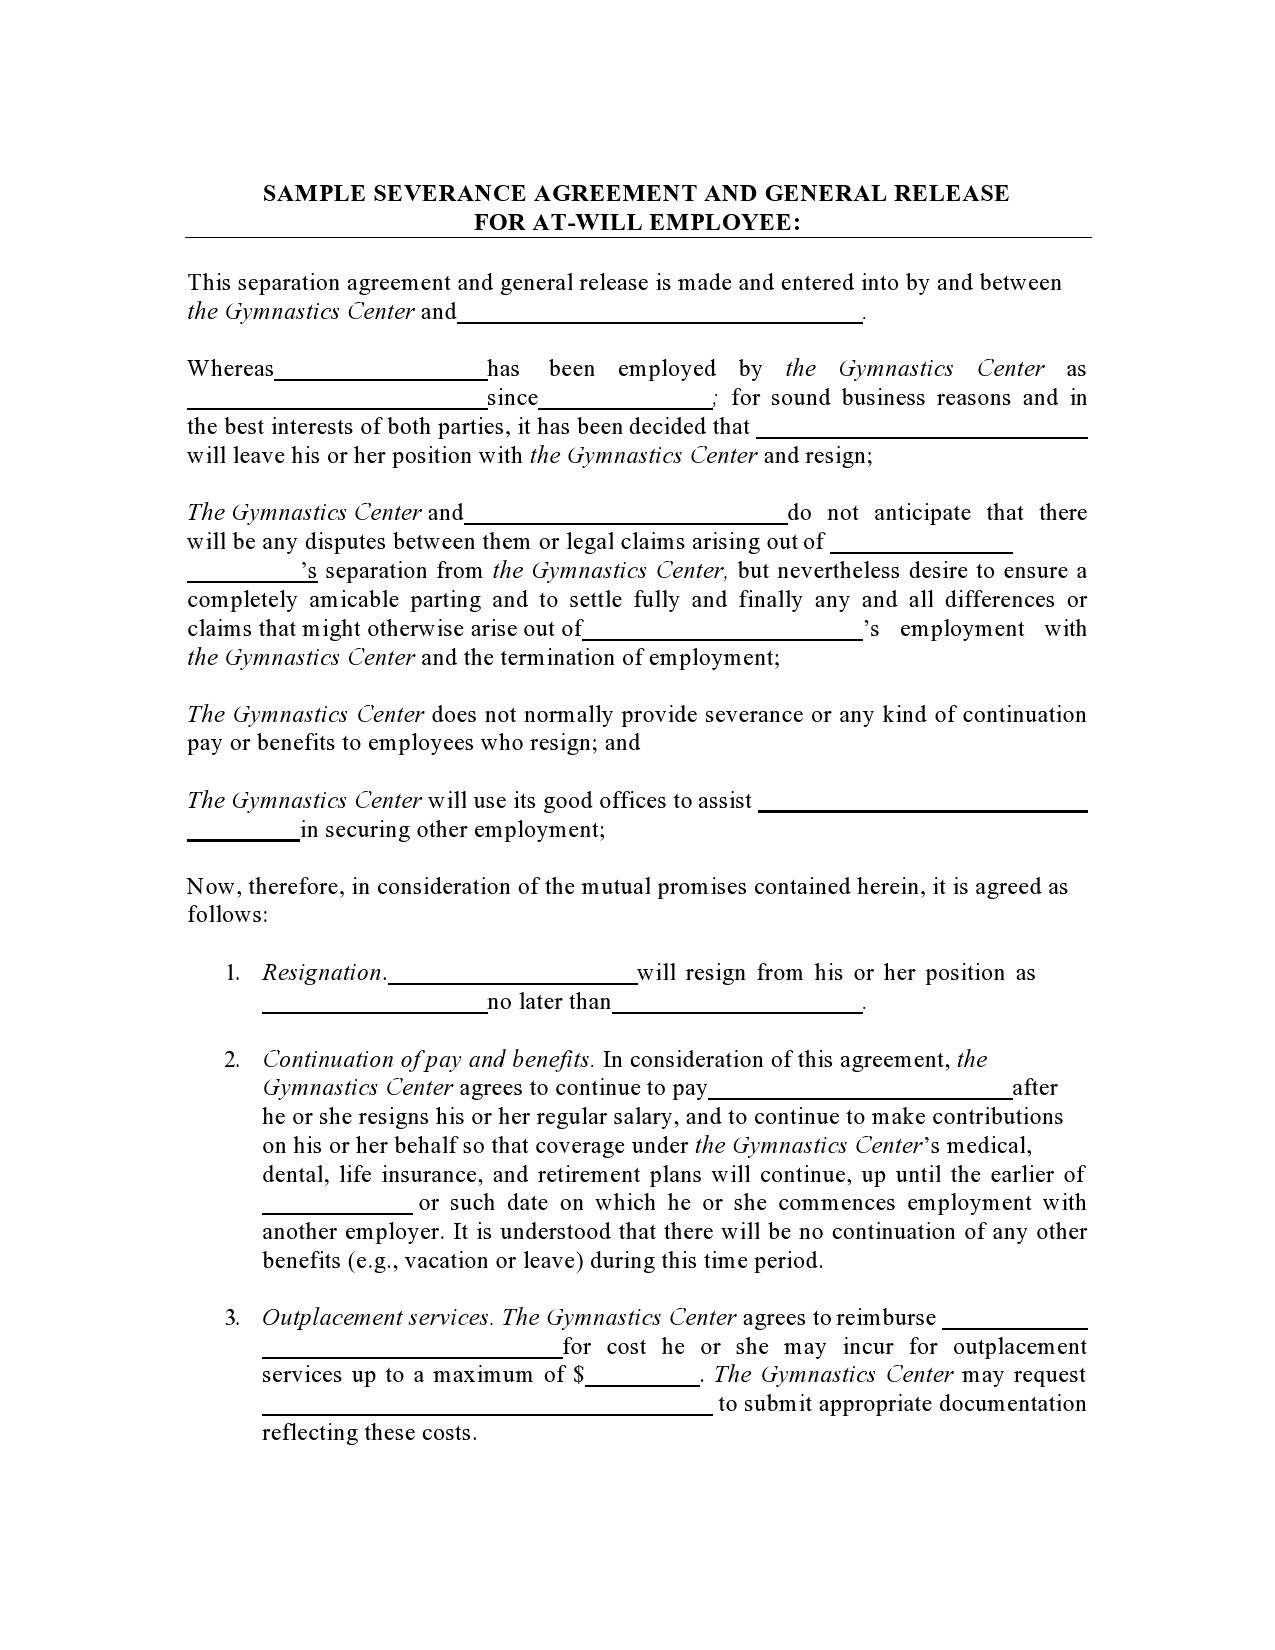 Free severance agreement template 12